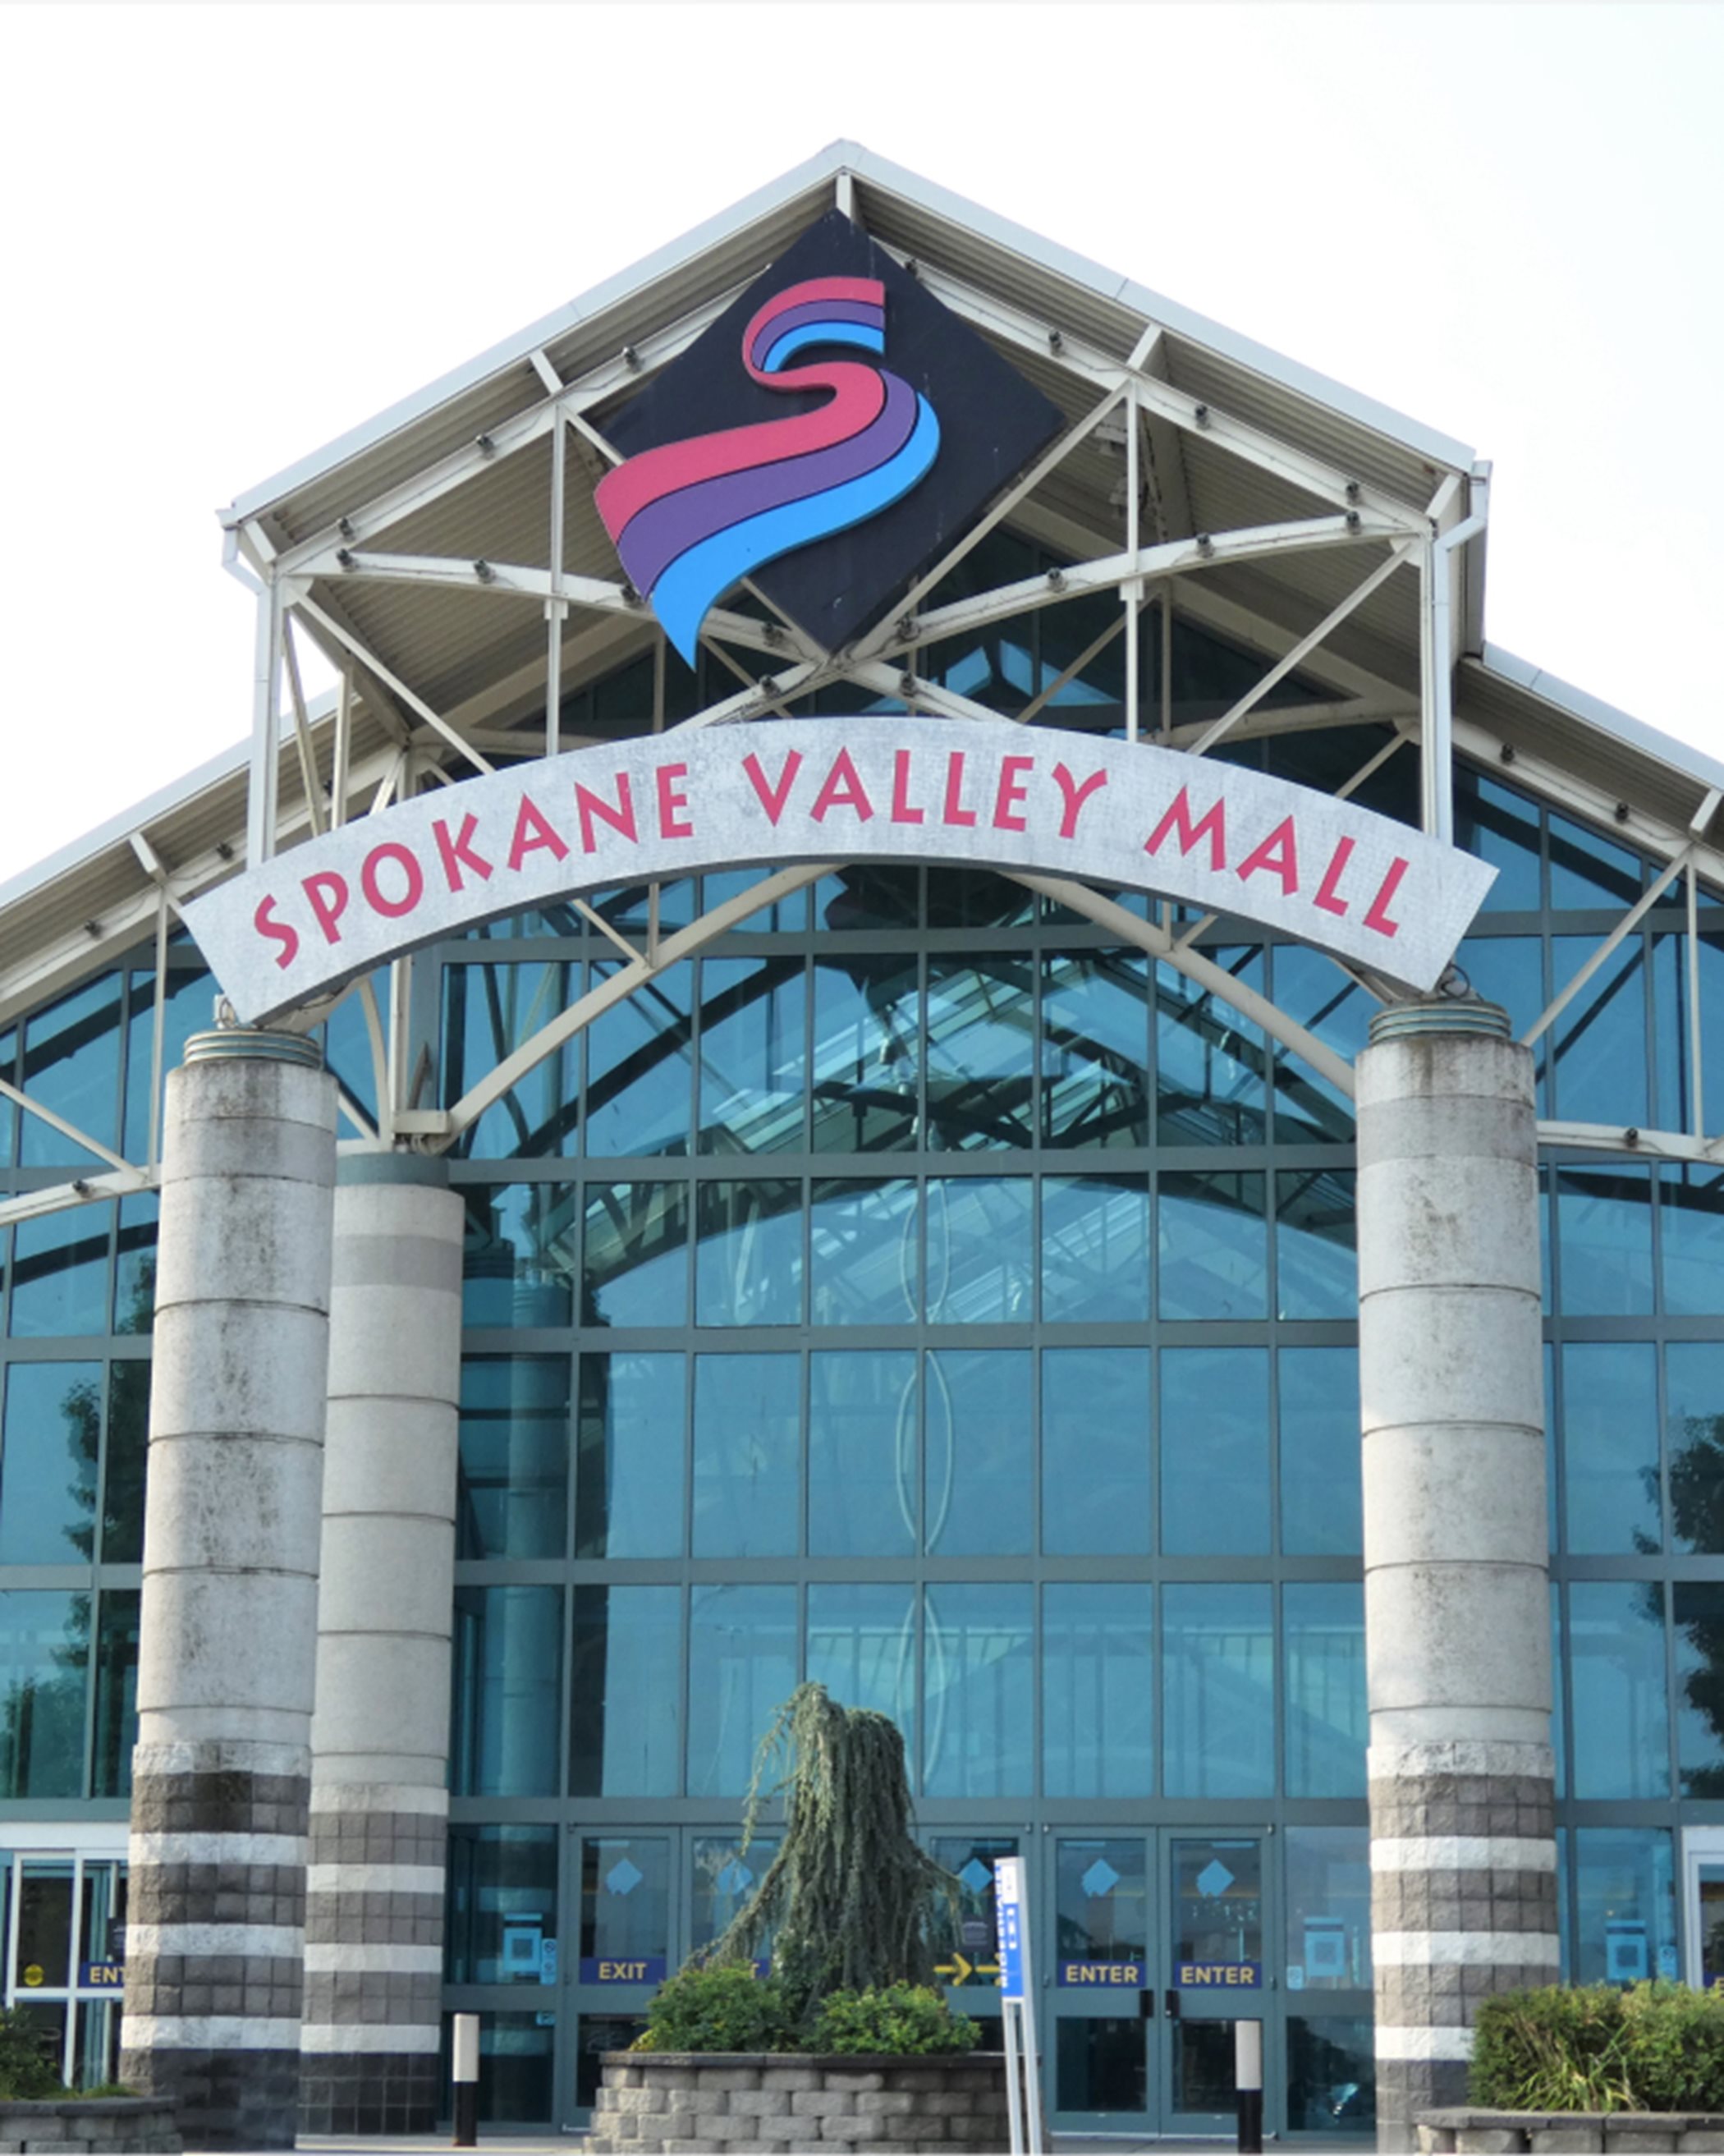 Spokane Valley Mall entrance